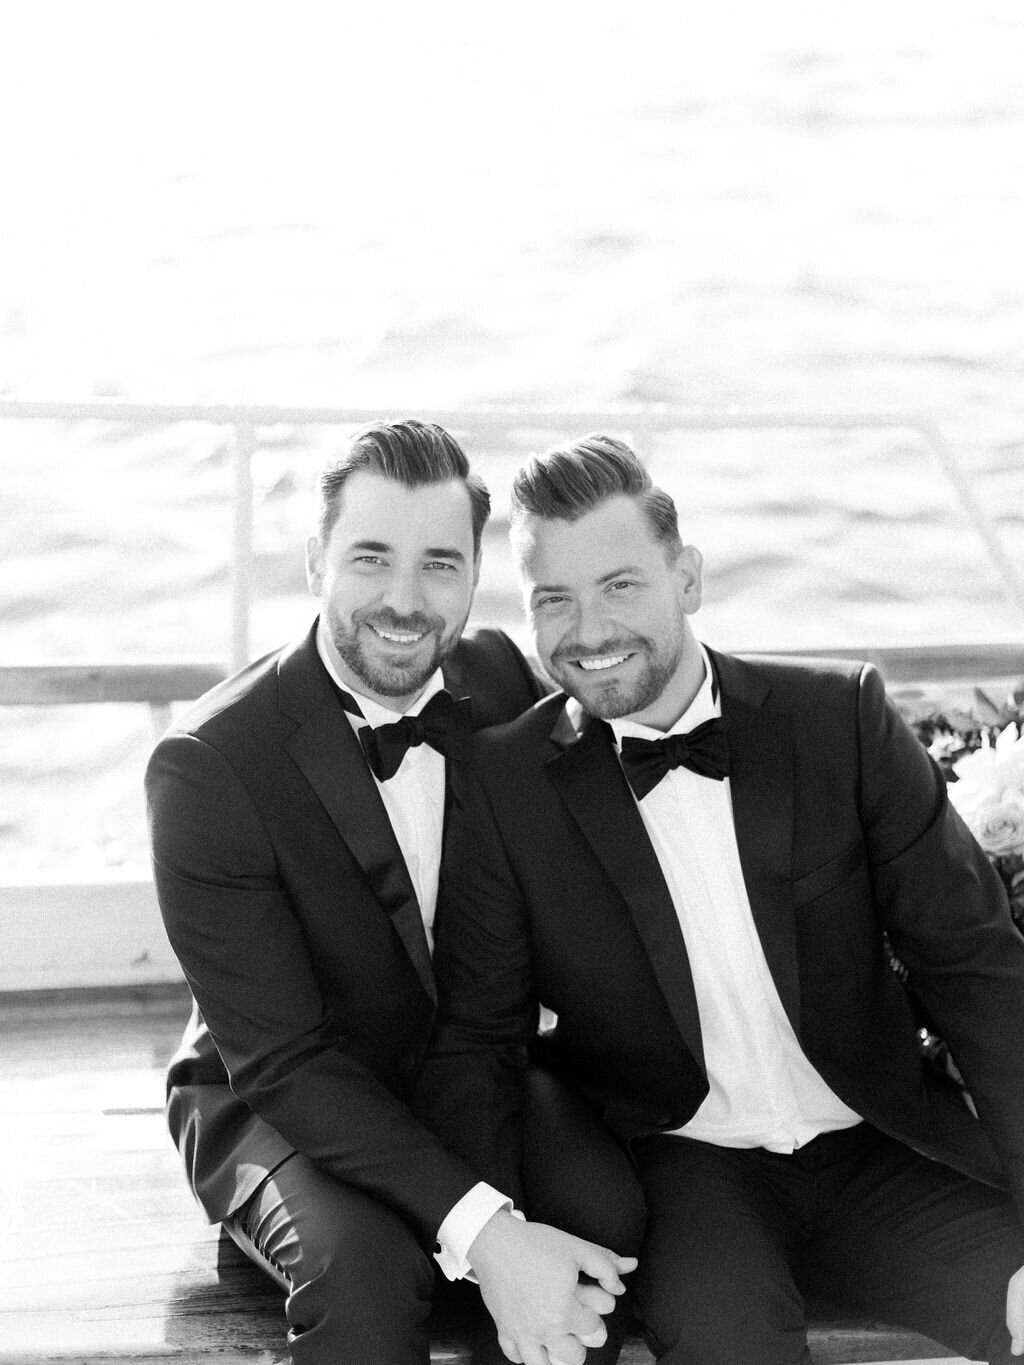 Kate-Murtaugh-Events-Boston-Harbor-sail-boat-yacht-elopement-luxury-wedding-planner-grooms